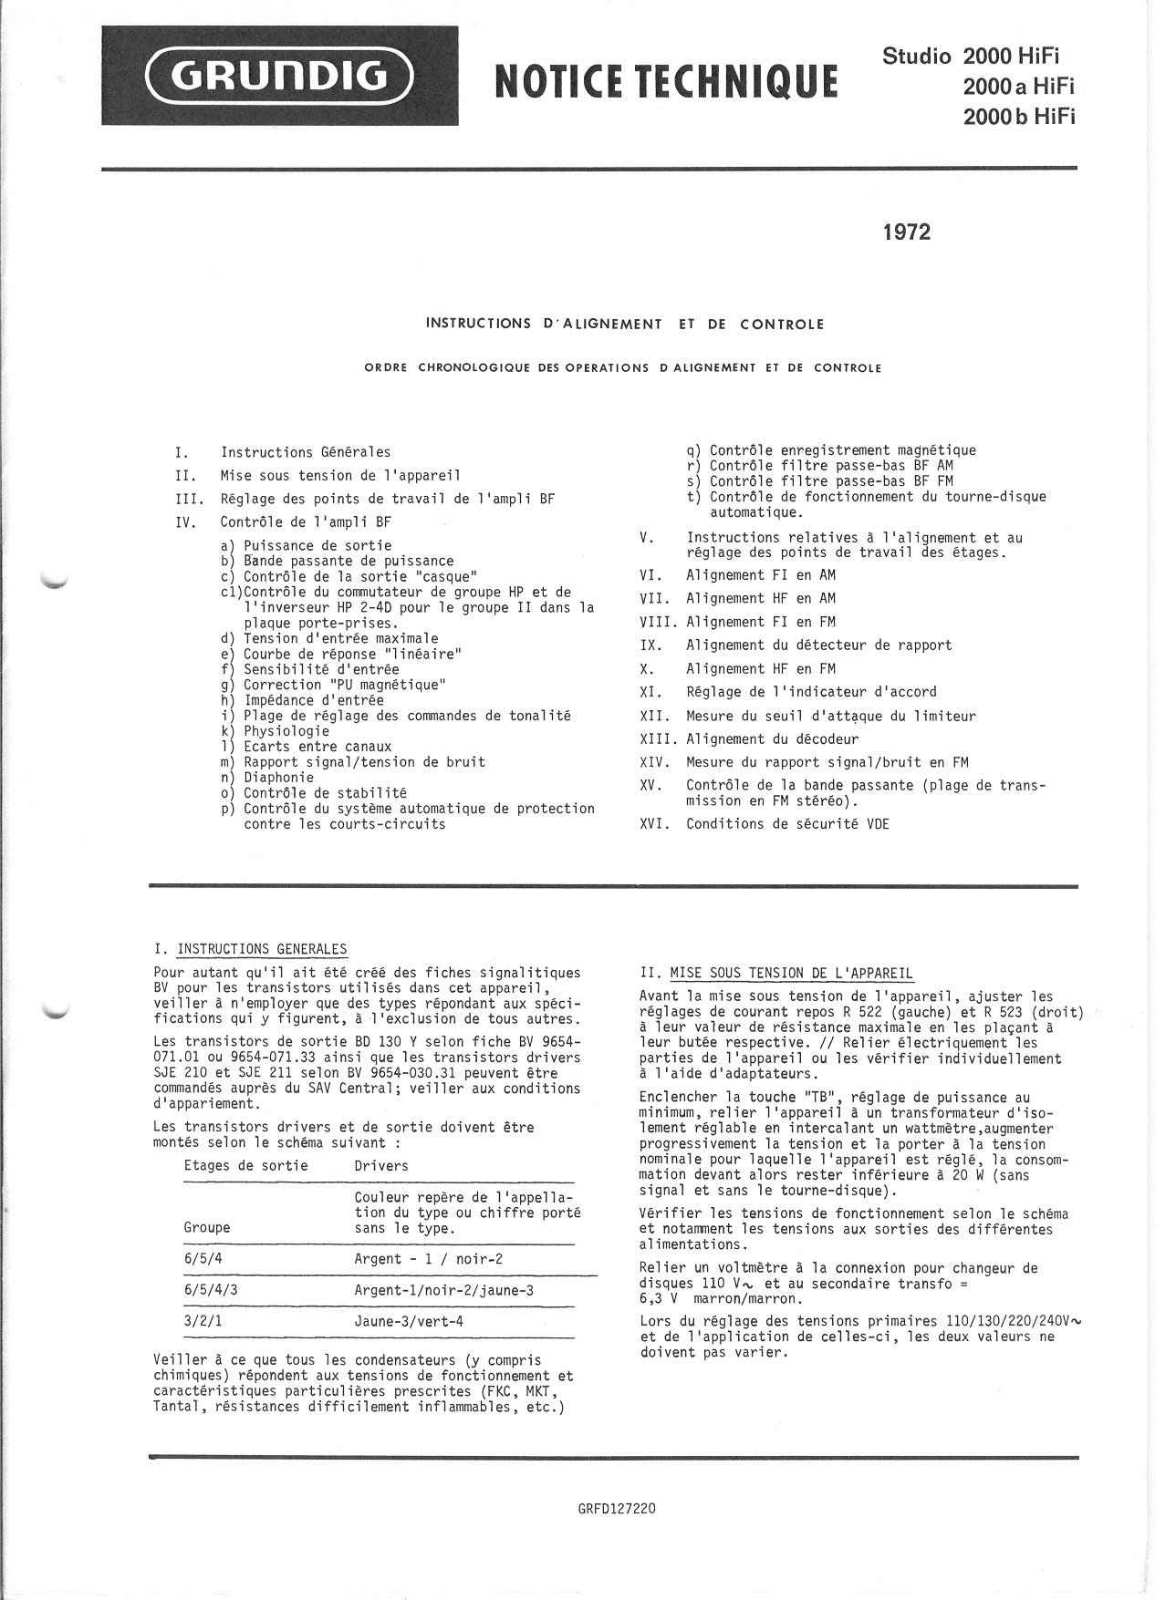 Grundig 2000-B, 2000, 2000-A Service Manual